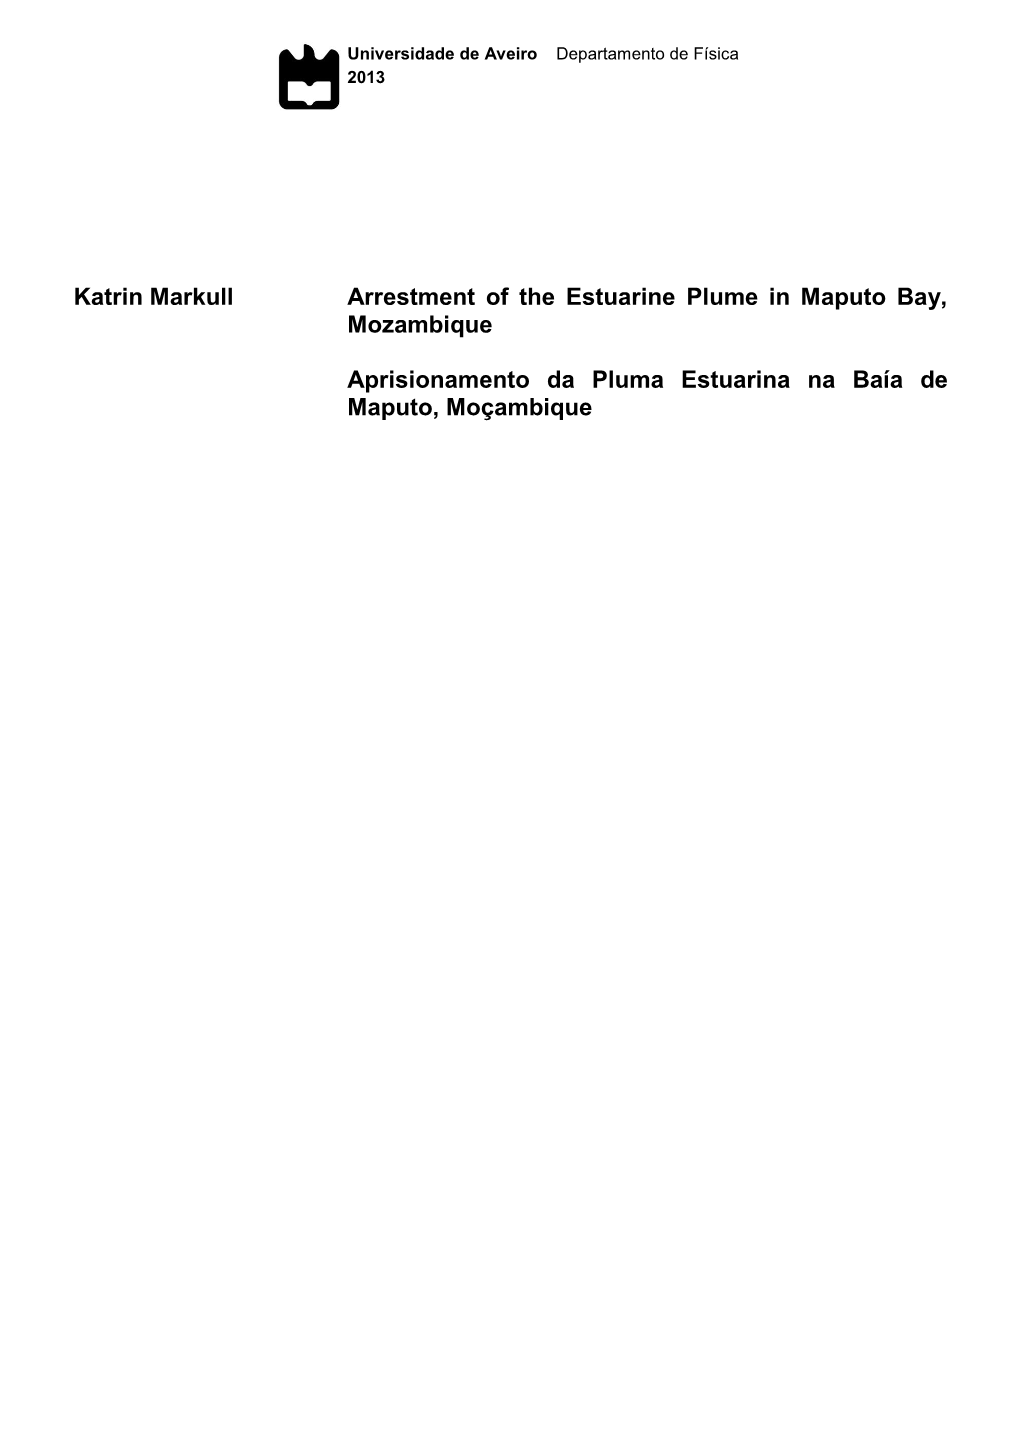 Katrin Markull Arrestment of the Estuarine Plume in Maputo Bay, Mozambique